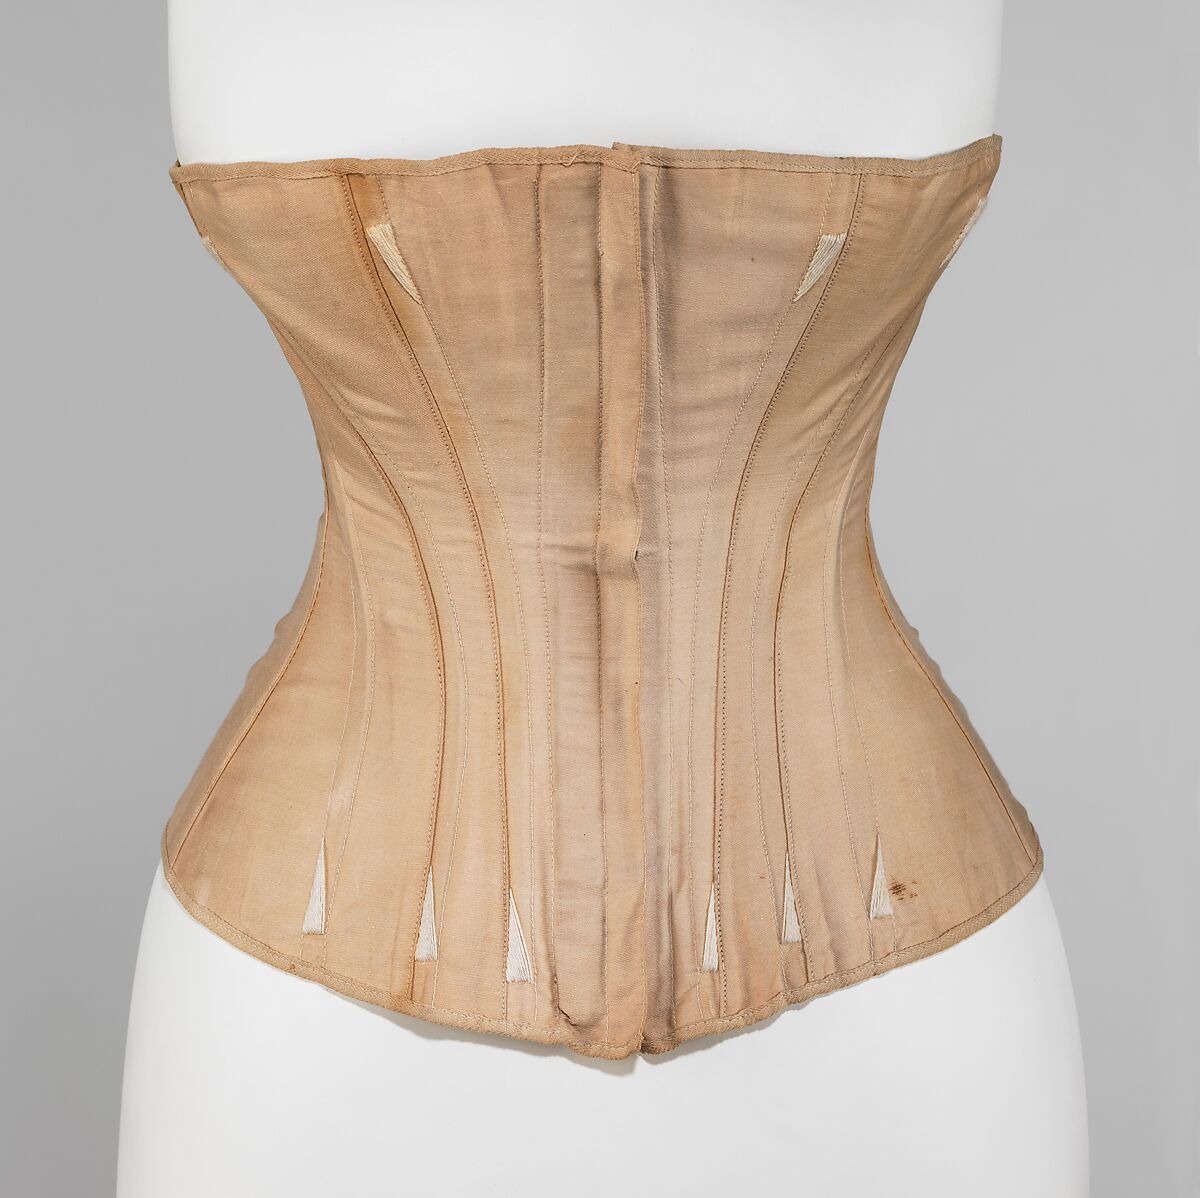 Corset, Worcester Skirt Company (American, 1861–1872), cotton, bone, American 